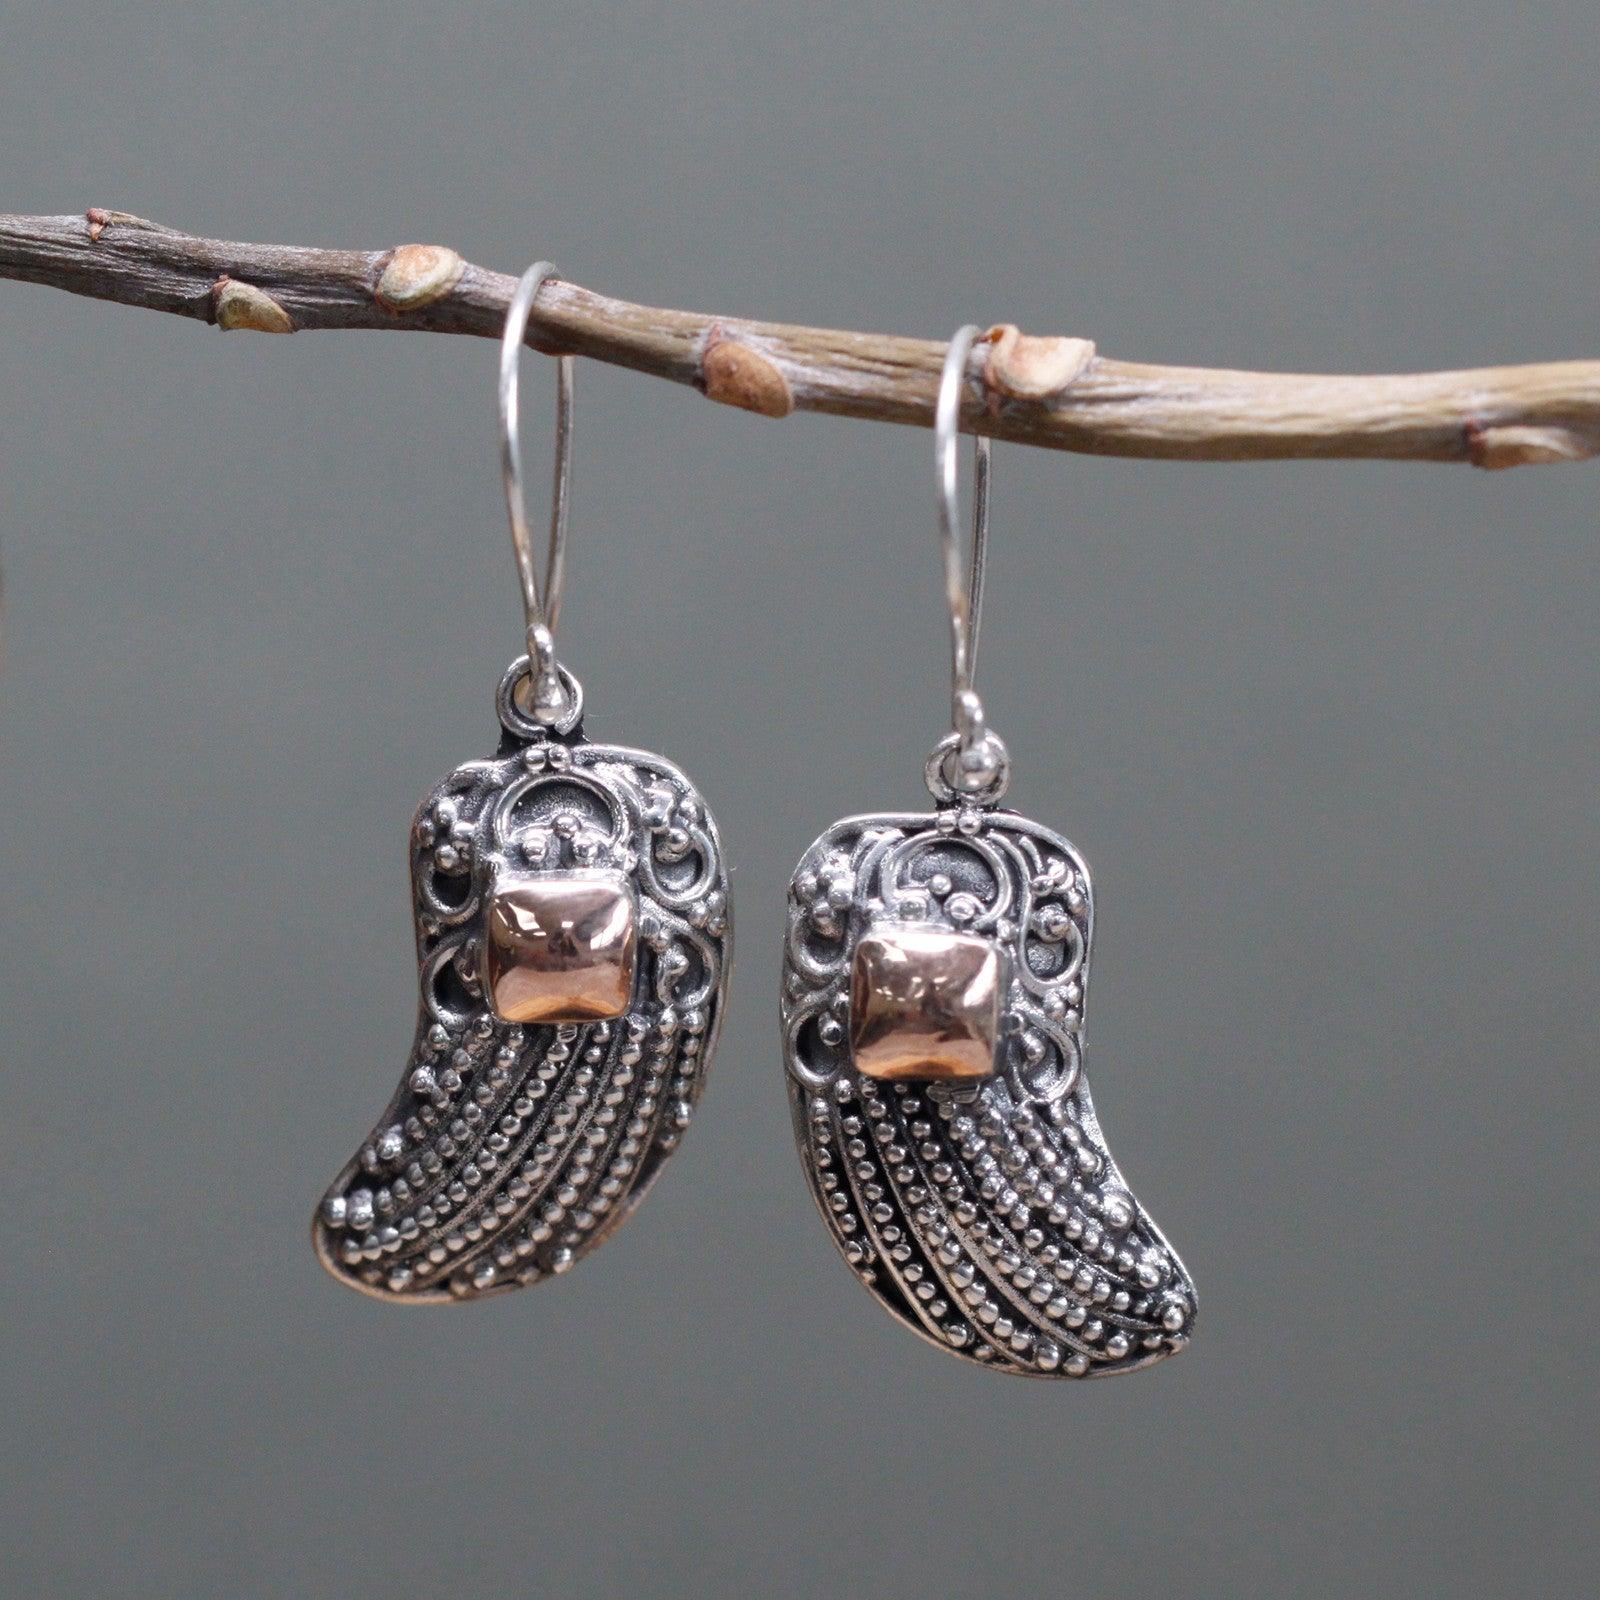 Handmade Bali Jewellery Silver & Gold Earring - Angel Wings - DuvetDay.co.uk